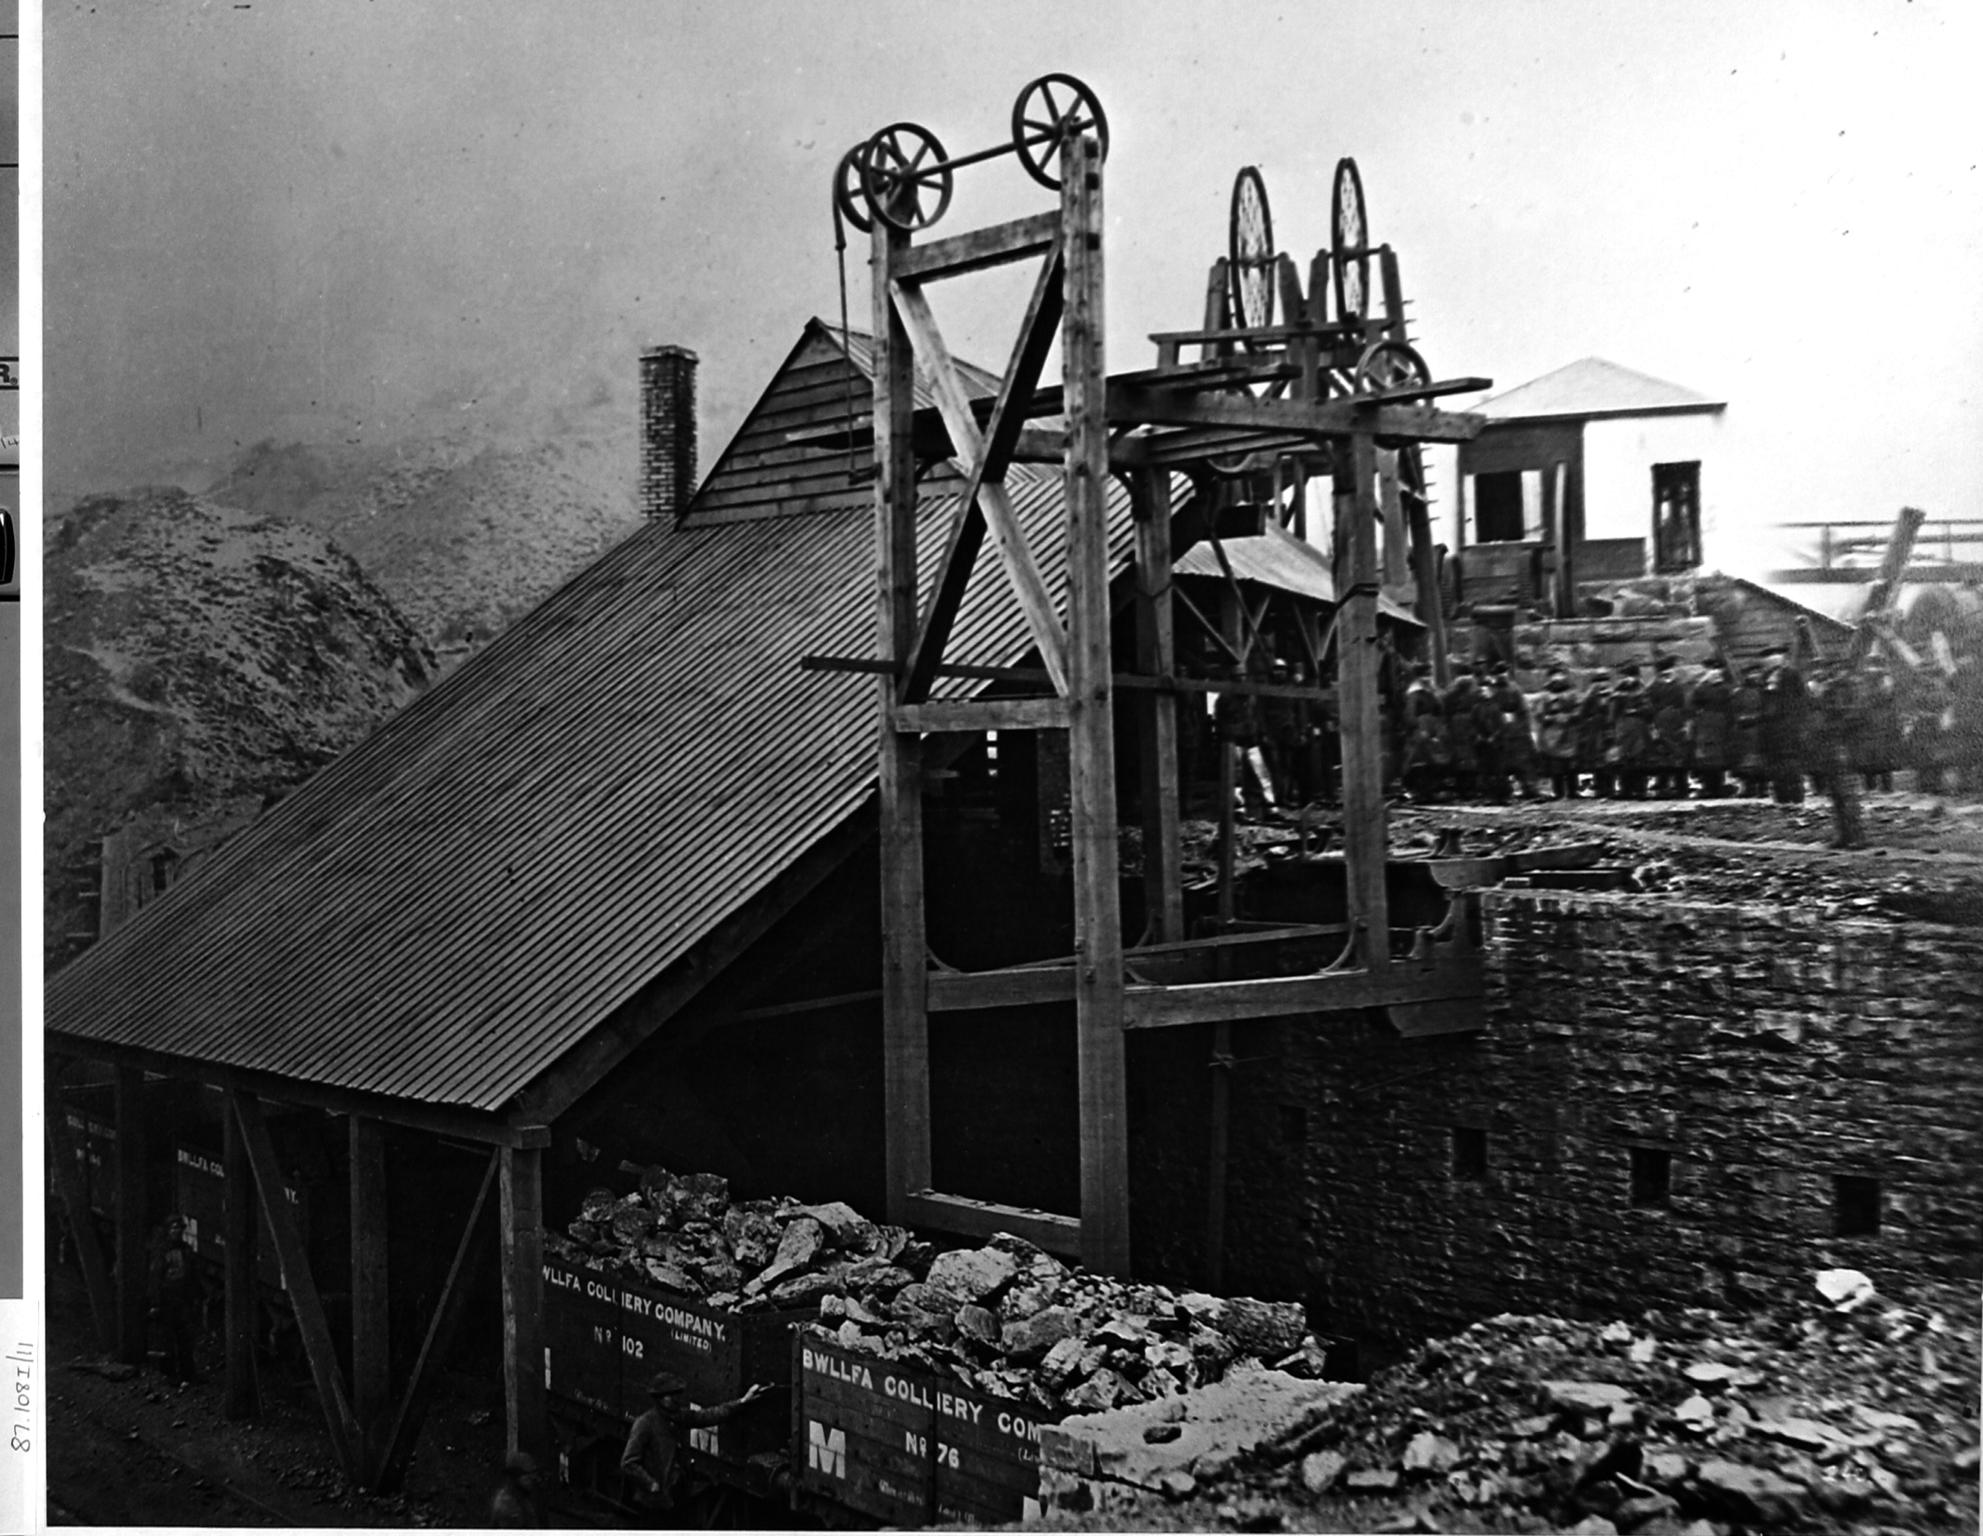 Bwllfa Colliery, photograph